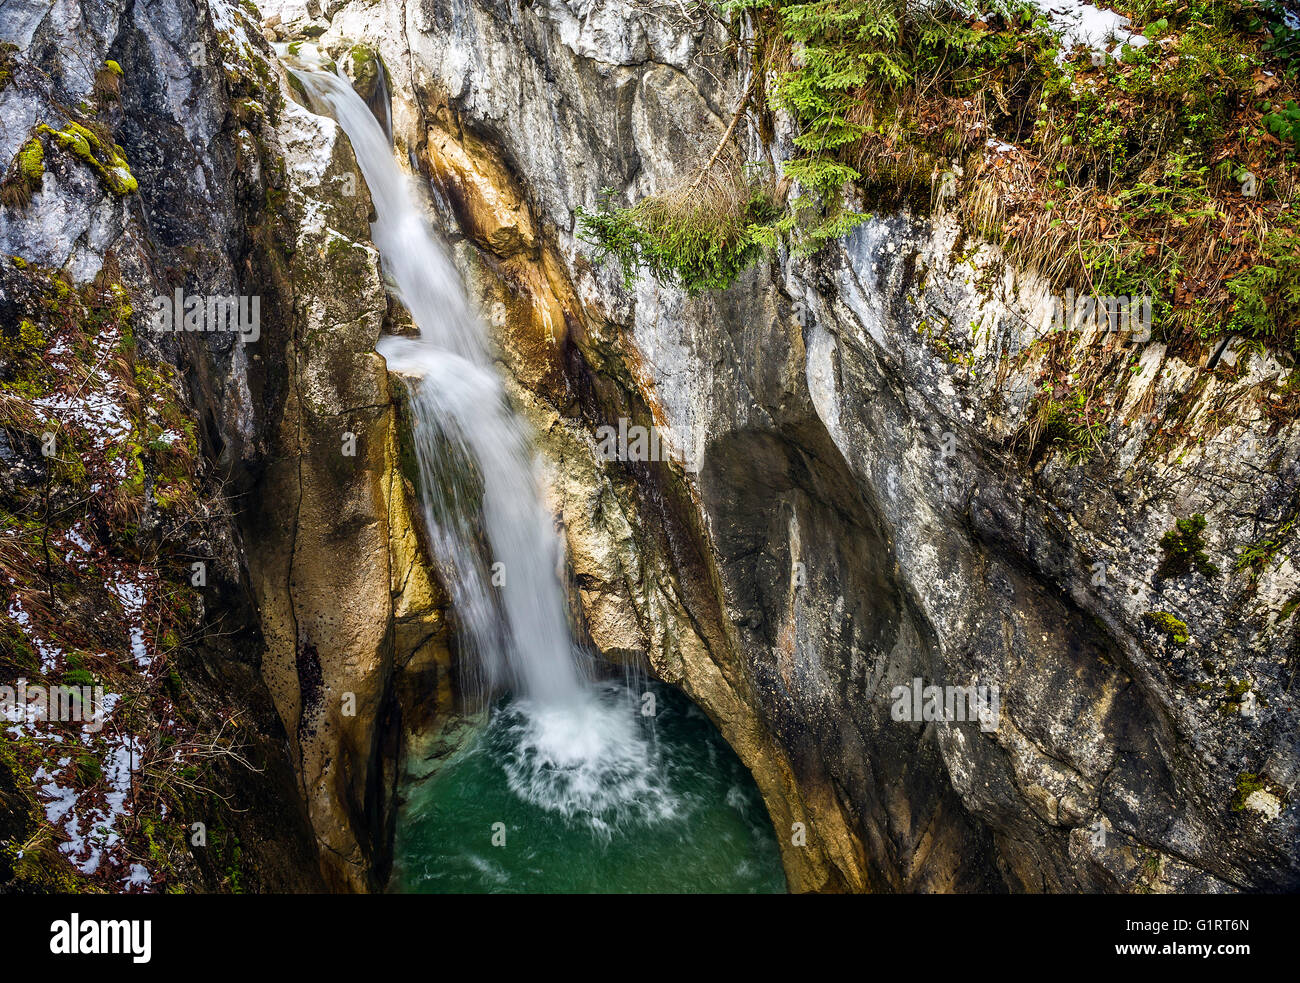 Tatzelwurm waterfall, Upper Level, Mangfall mountains, Oberaudorf, Upper Bavaria, Bavaria, Germany Stock Photo